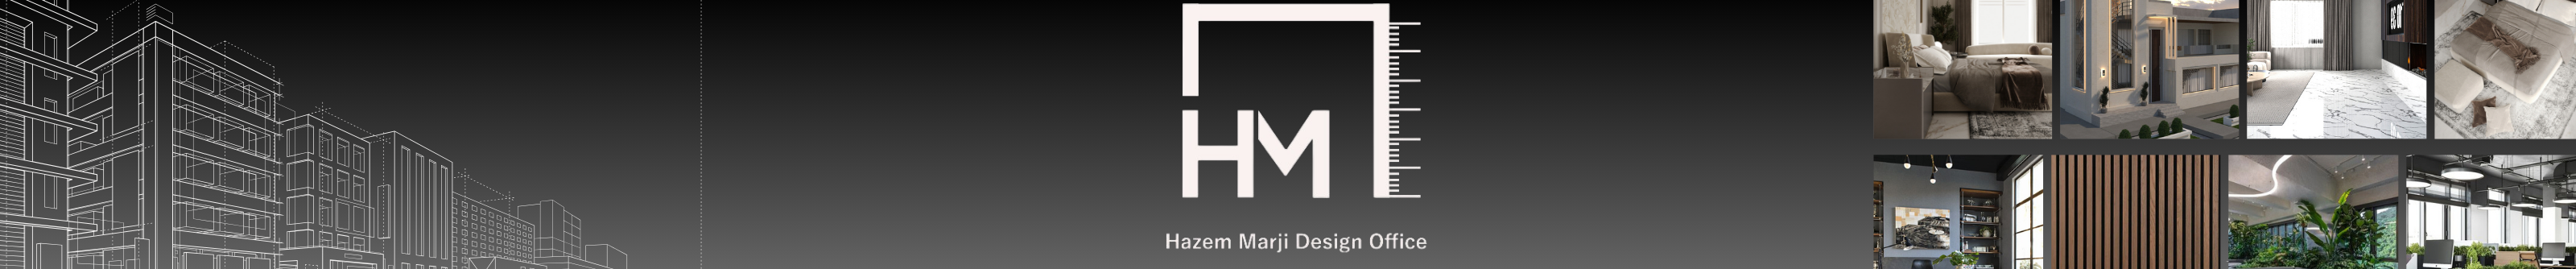 HM Architect | Design Office's profile banner